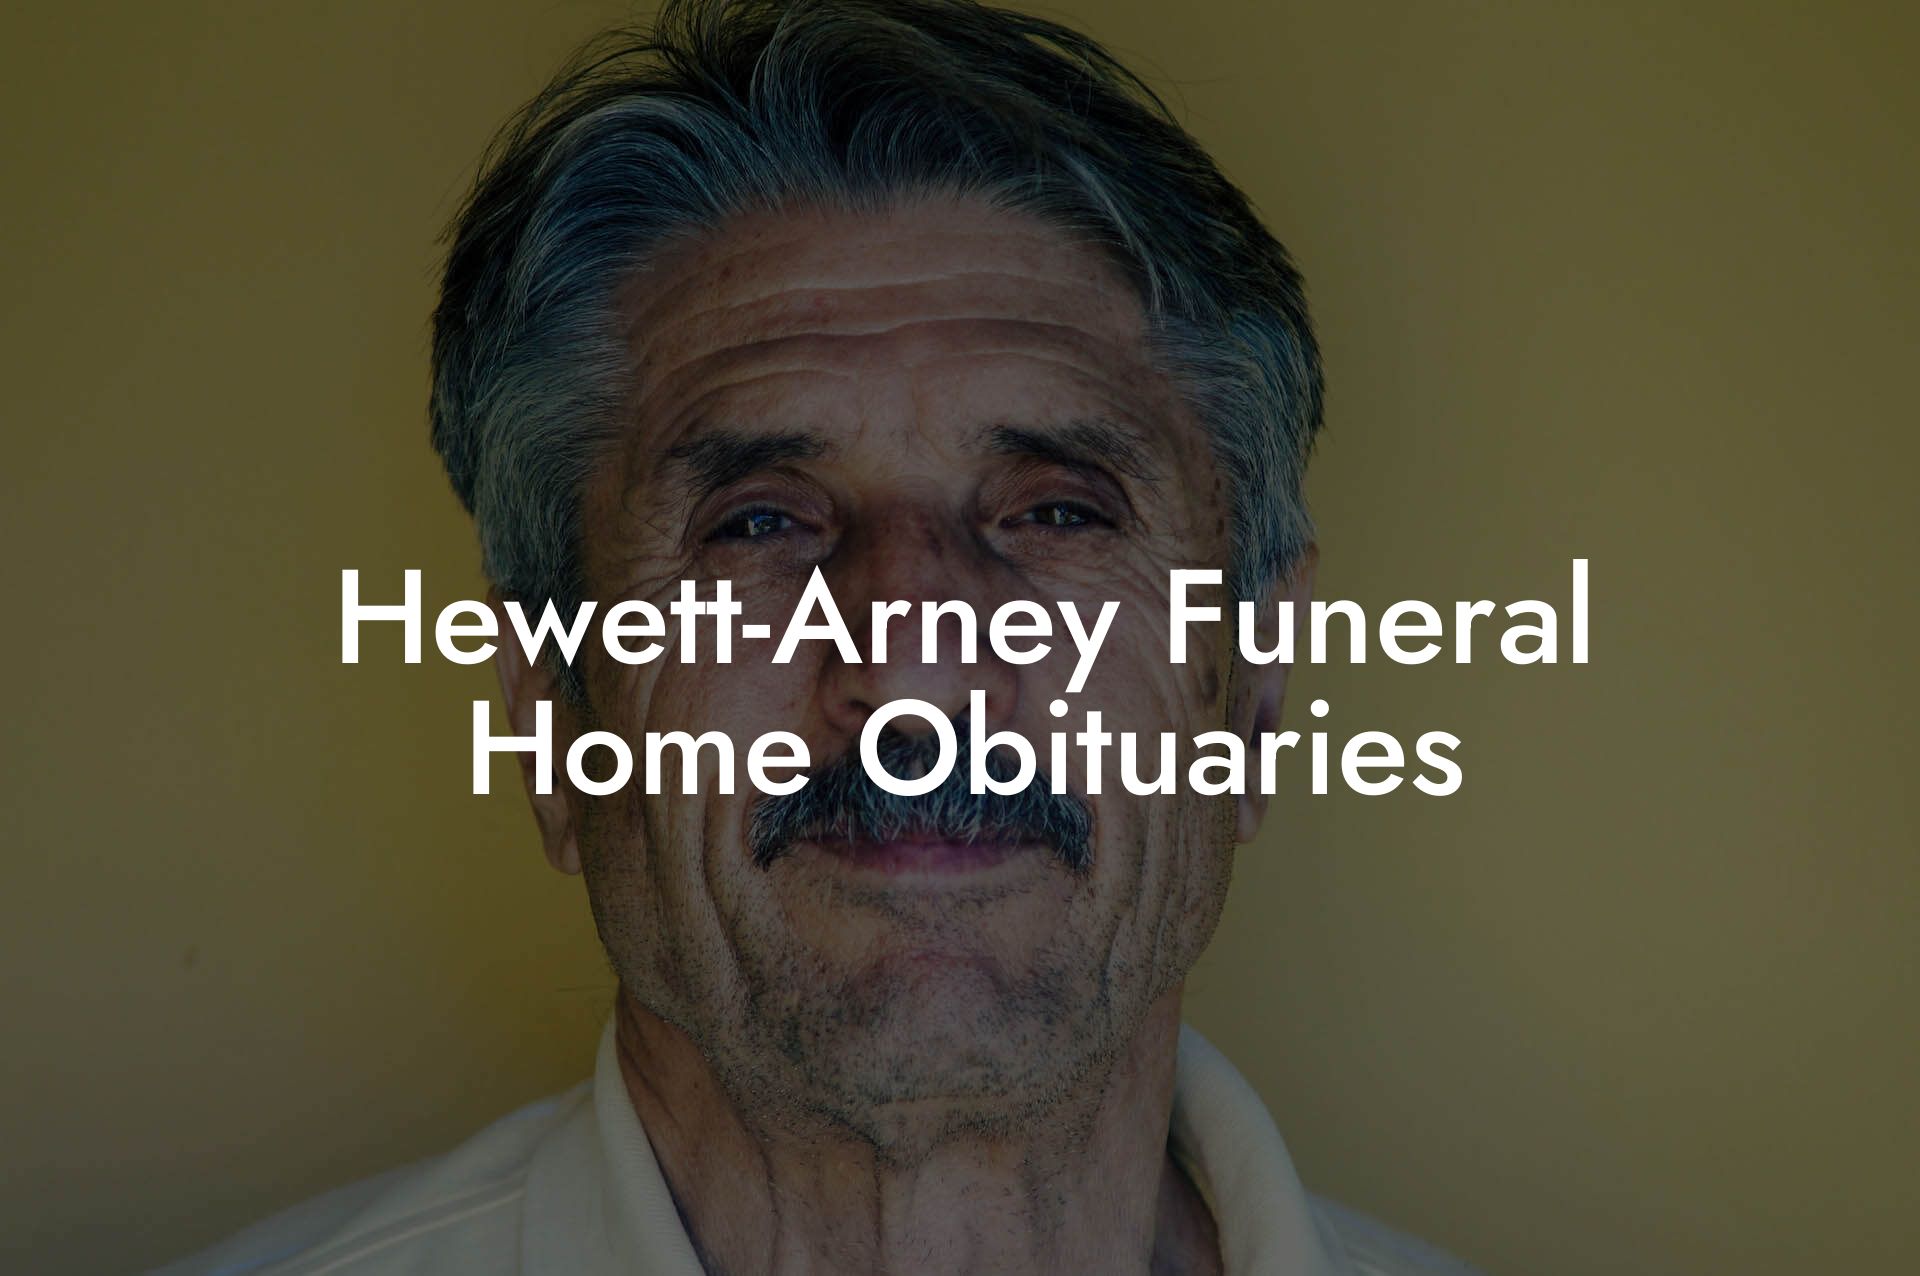 Hewett-Arney Funeral Home Obituaries